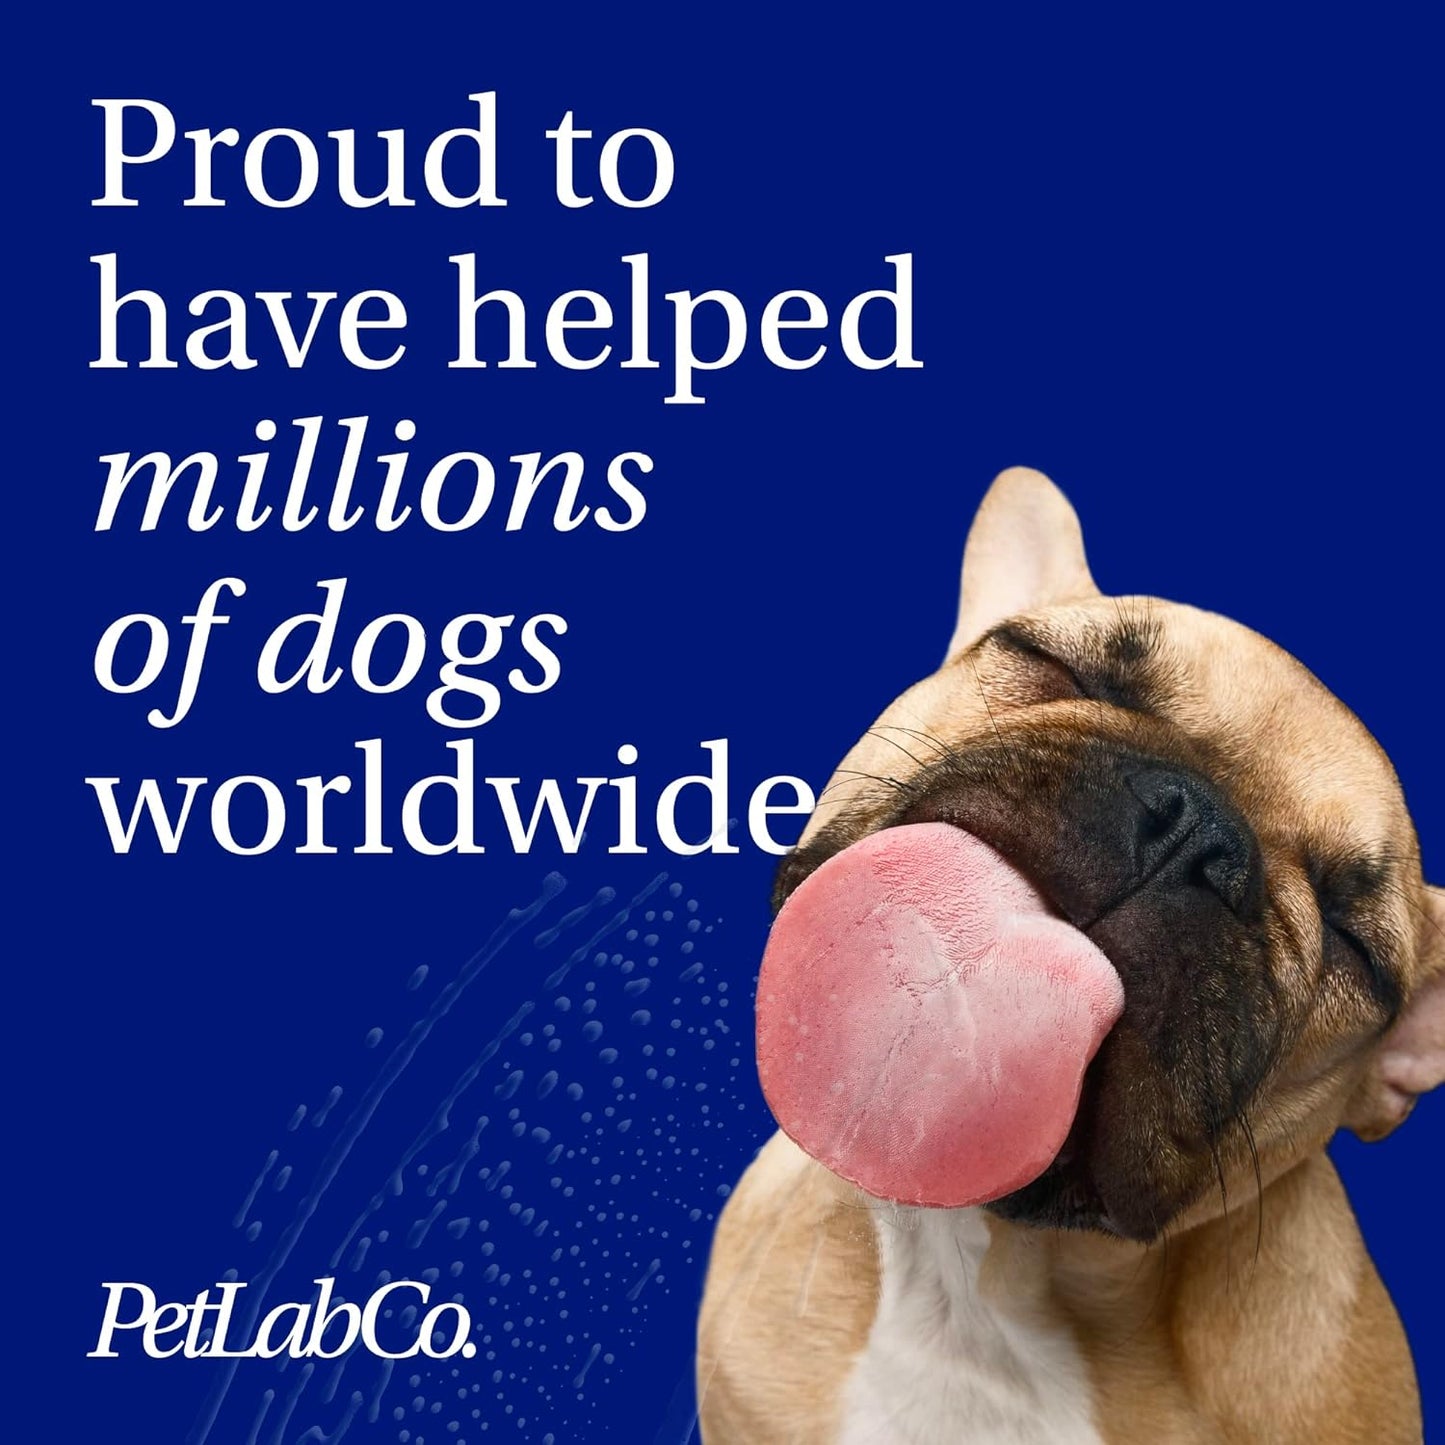 PetLab Co. Dog Dental Formula - Keep Dog Breath Fresh and Teeth Clean - Supports Gum Health - Dog Water Additive Dental Care Targets Tartar - 2pack